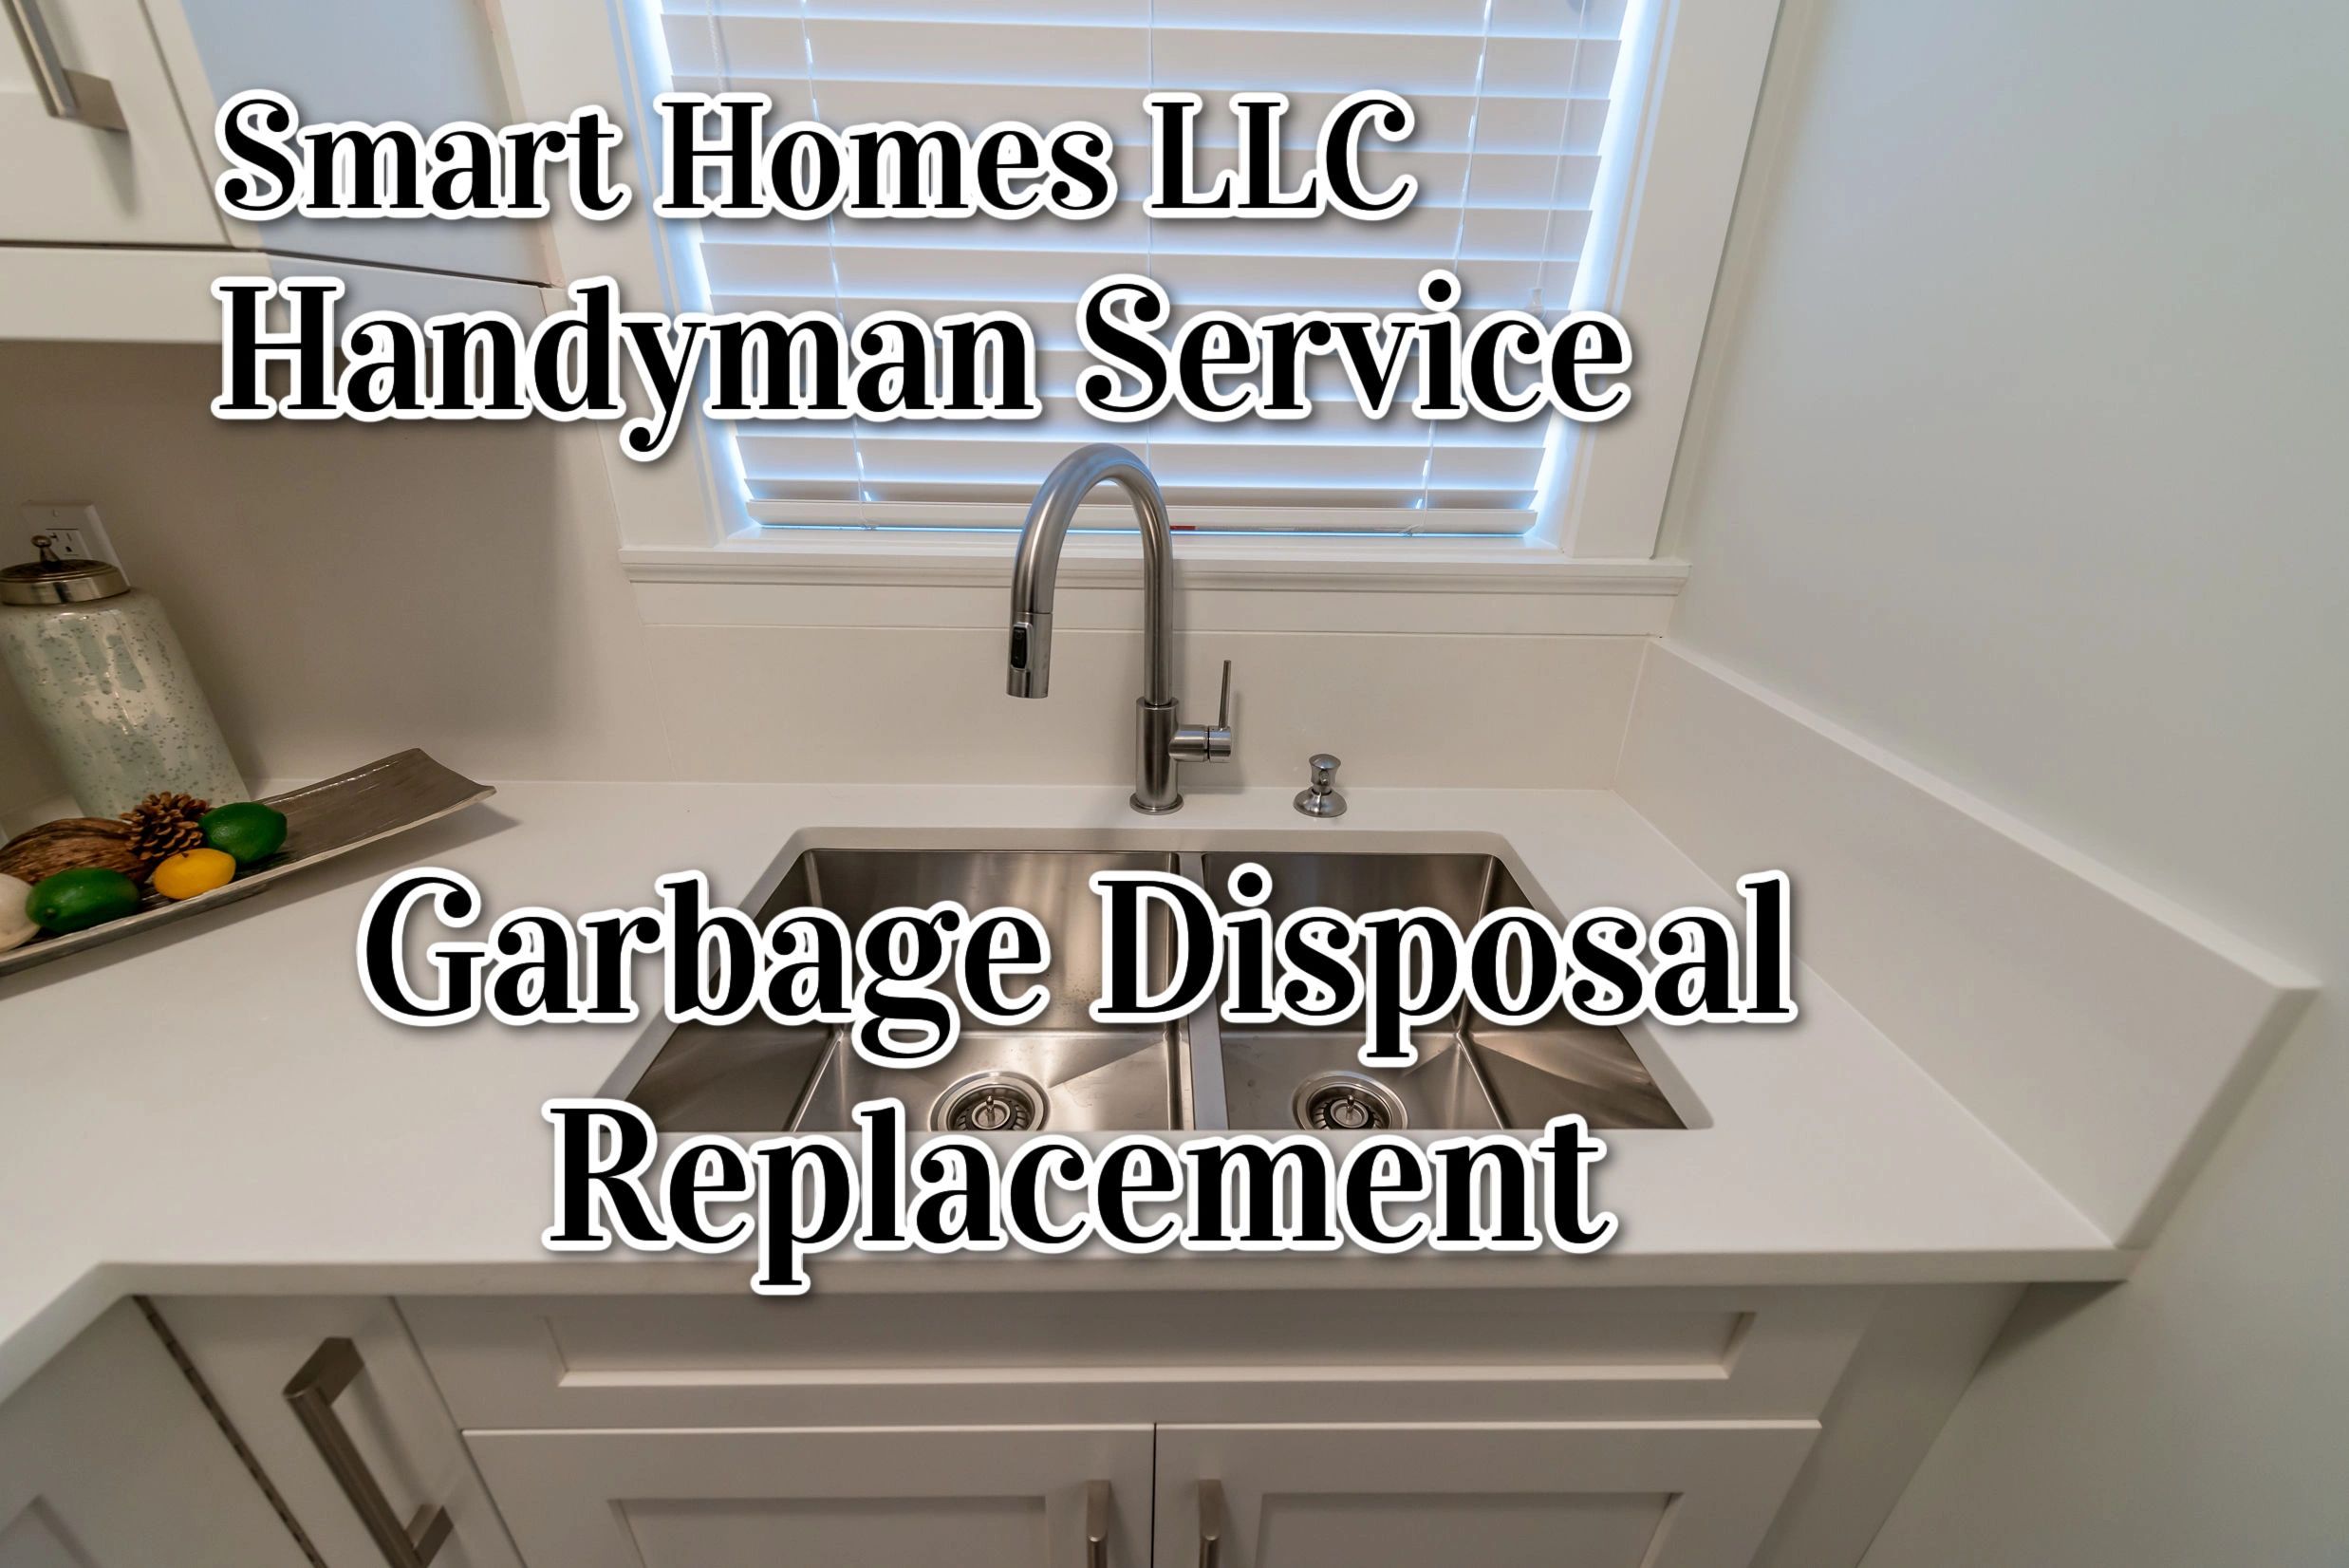 Garbage Disposal Replacement Service